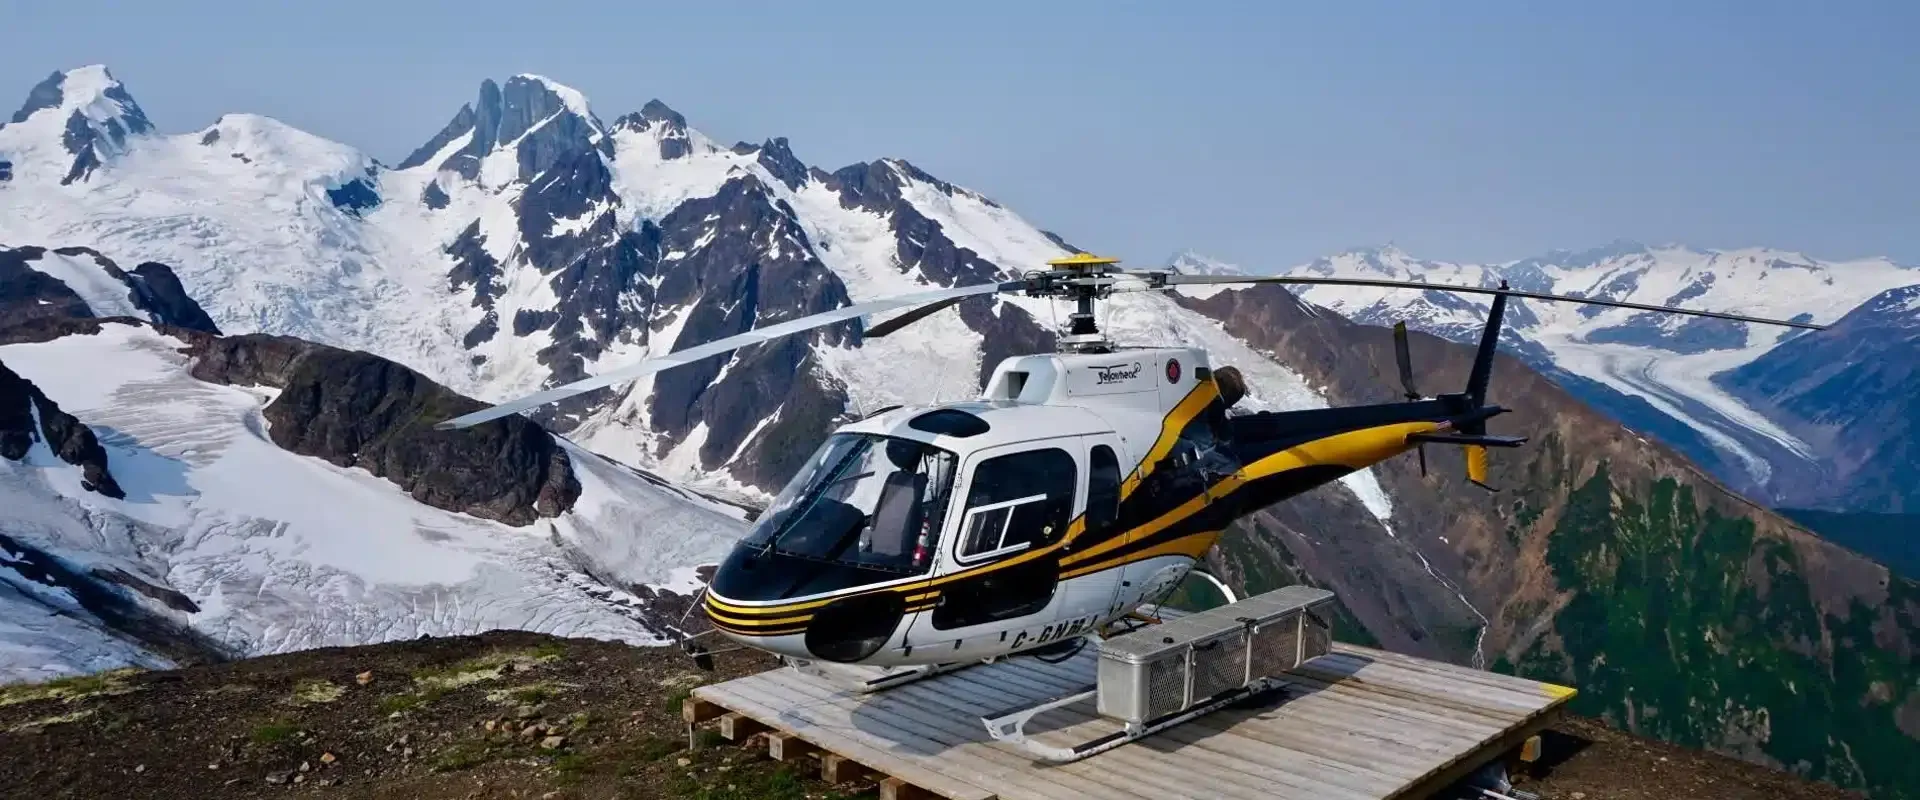 Yellowhead Helicopters mountaintop landing